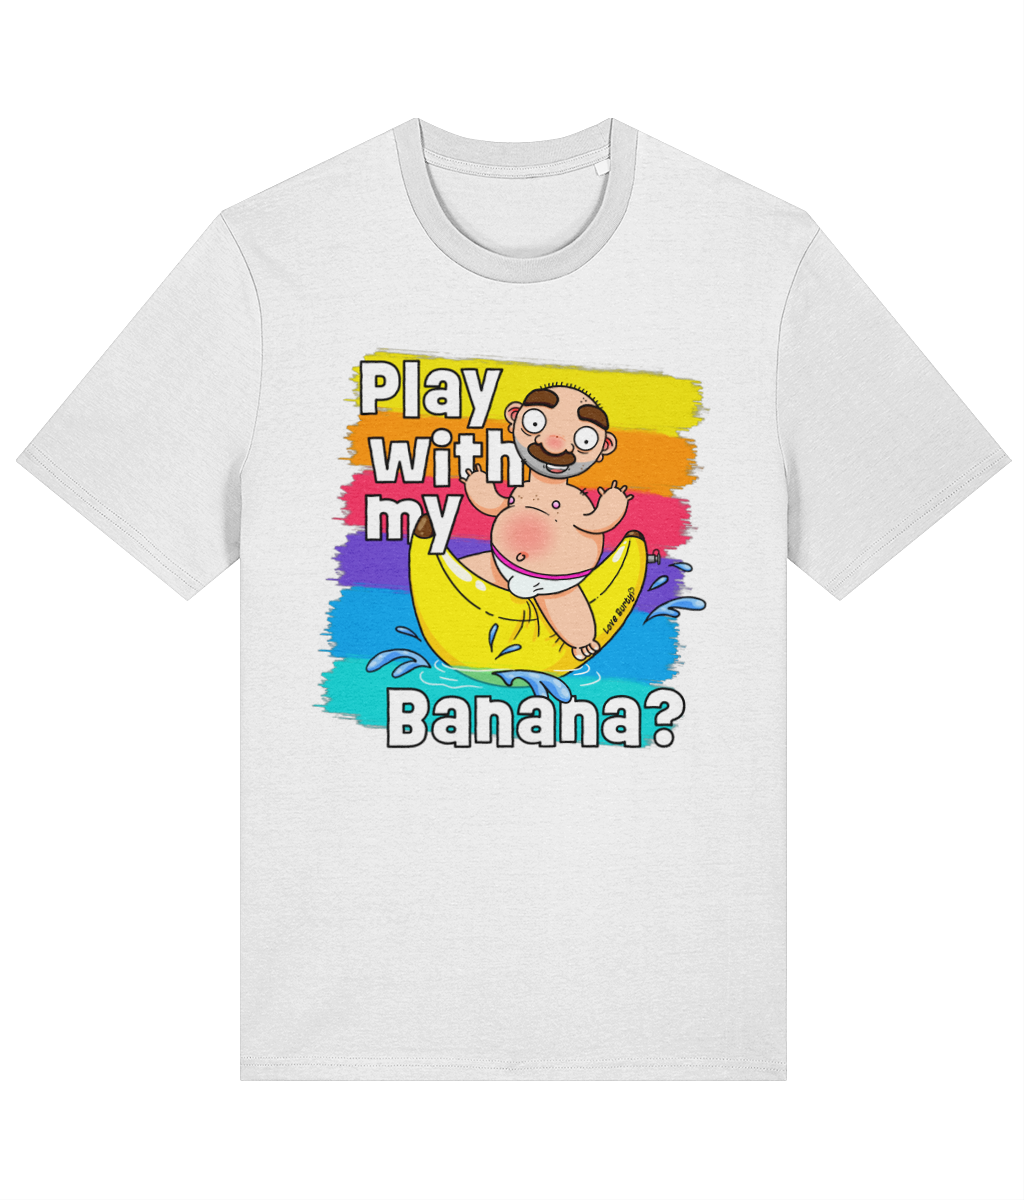 Play with my Banana? T-Shirt